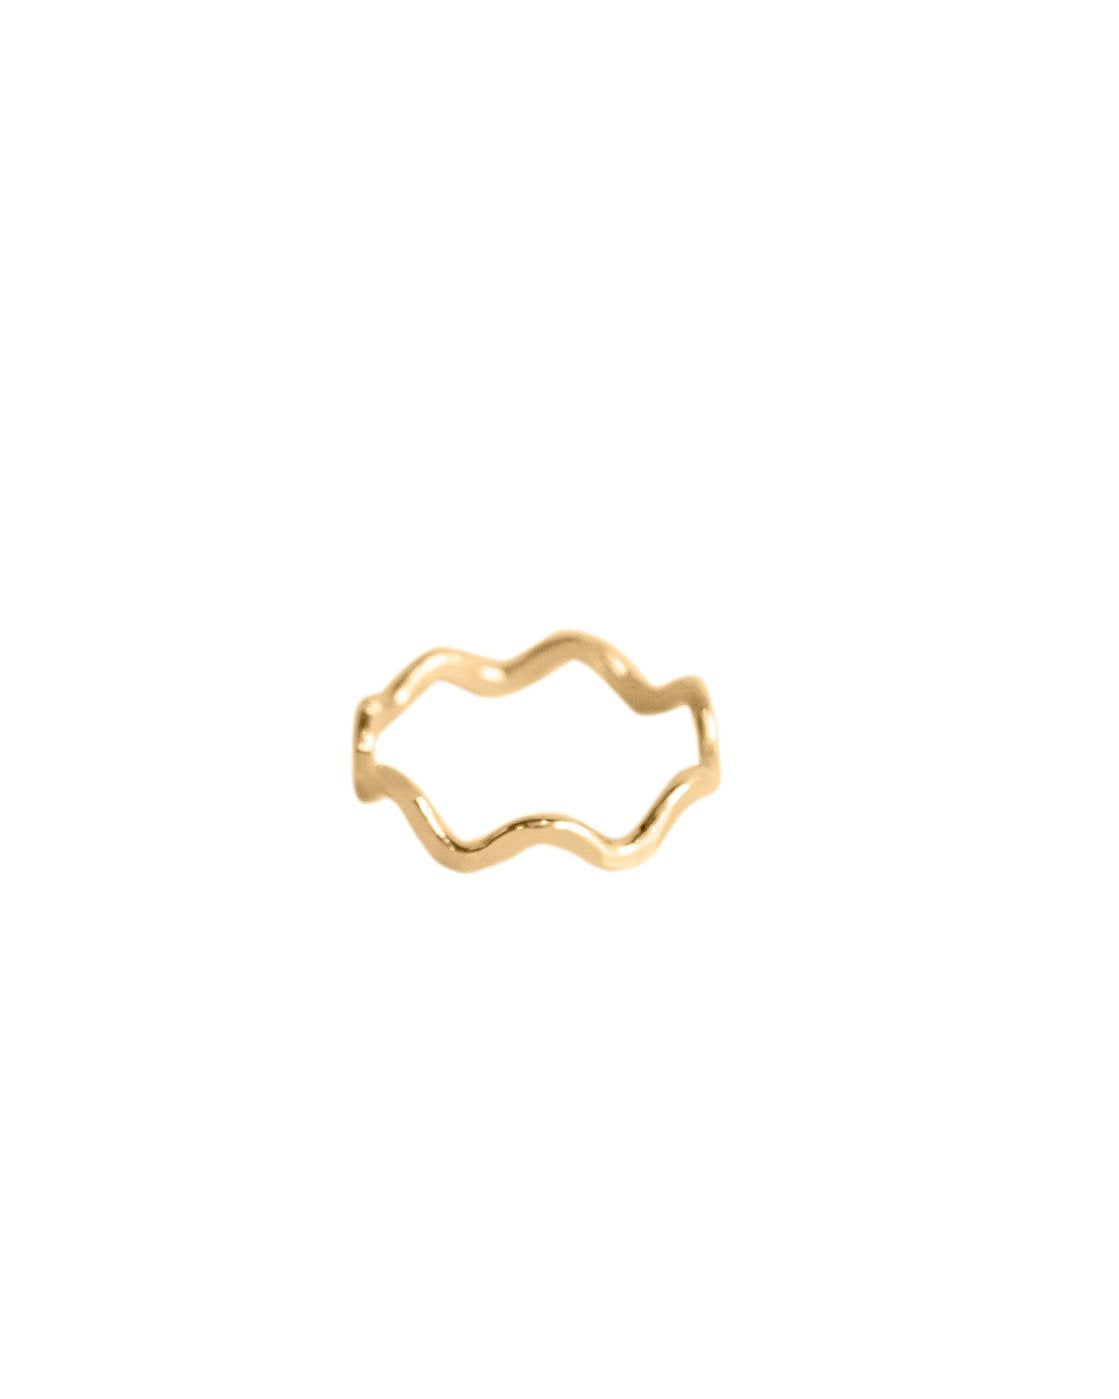 SUN & SELENE iris gold fill stacking ring